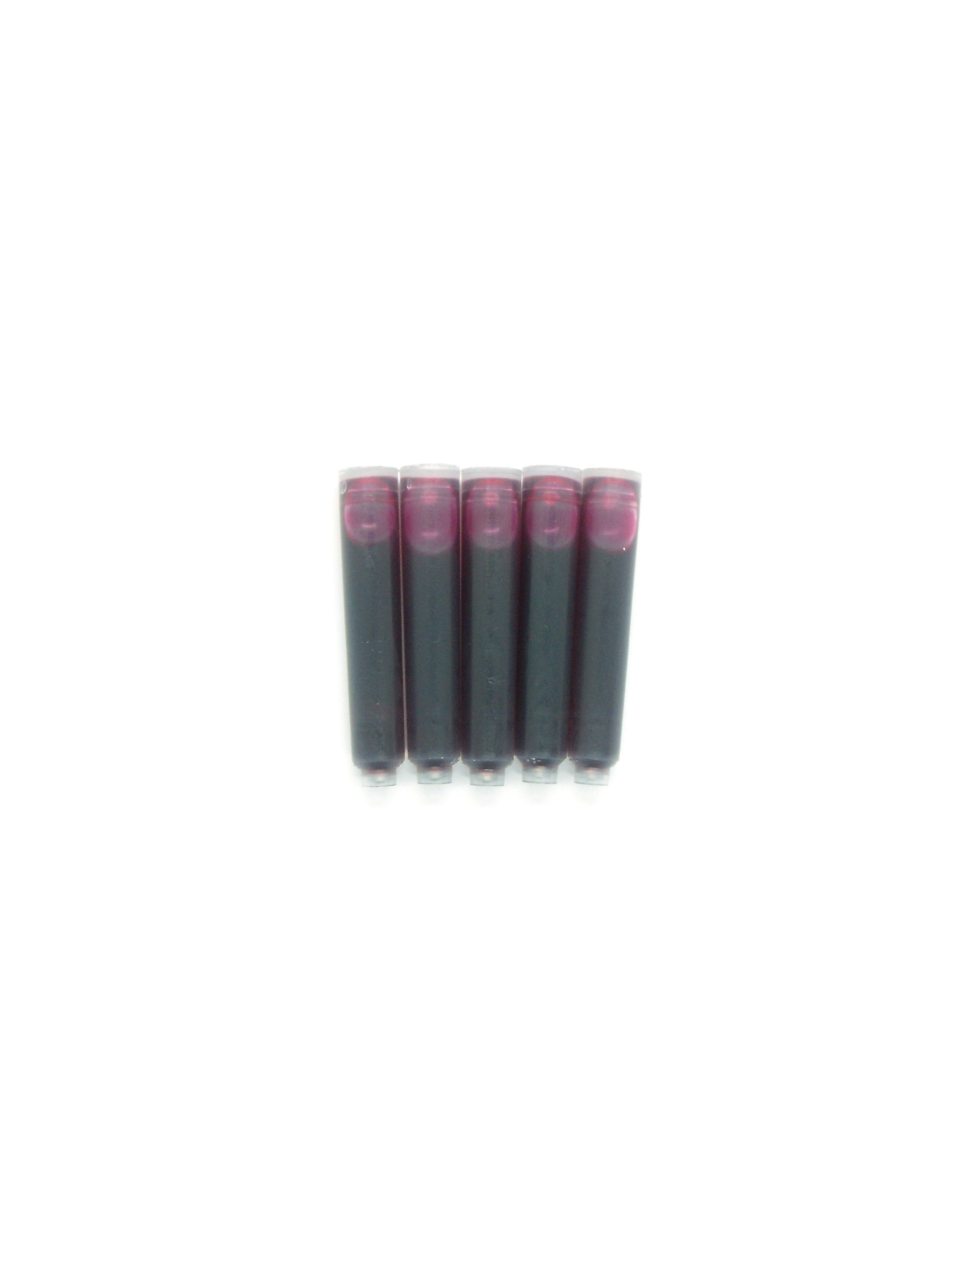 PenConverter Ink Cartridges For Ranga Pens Fountain Pens (Pink)